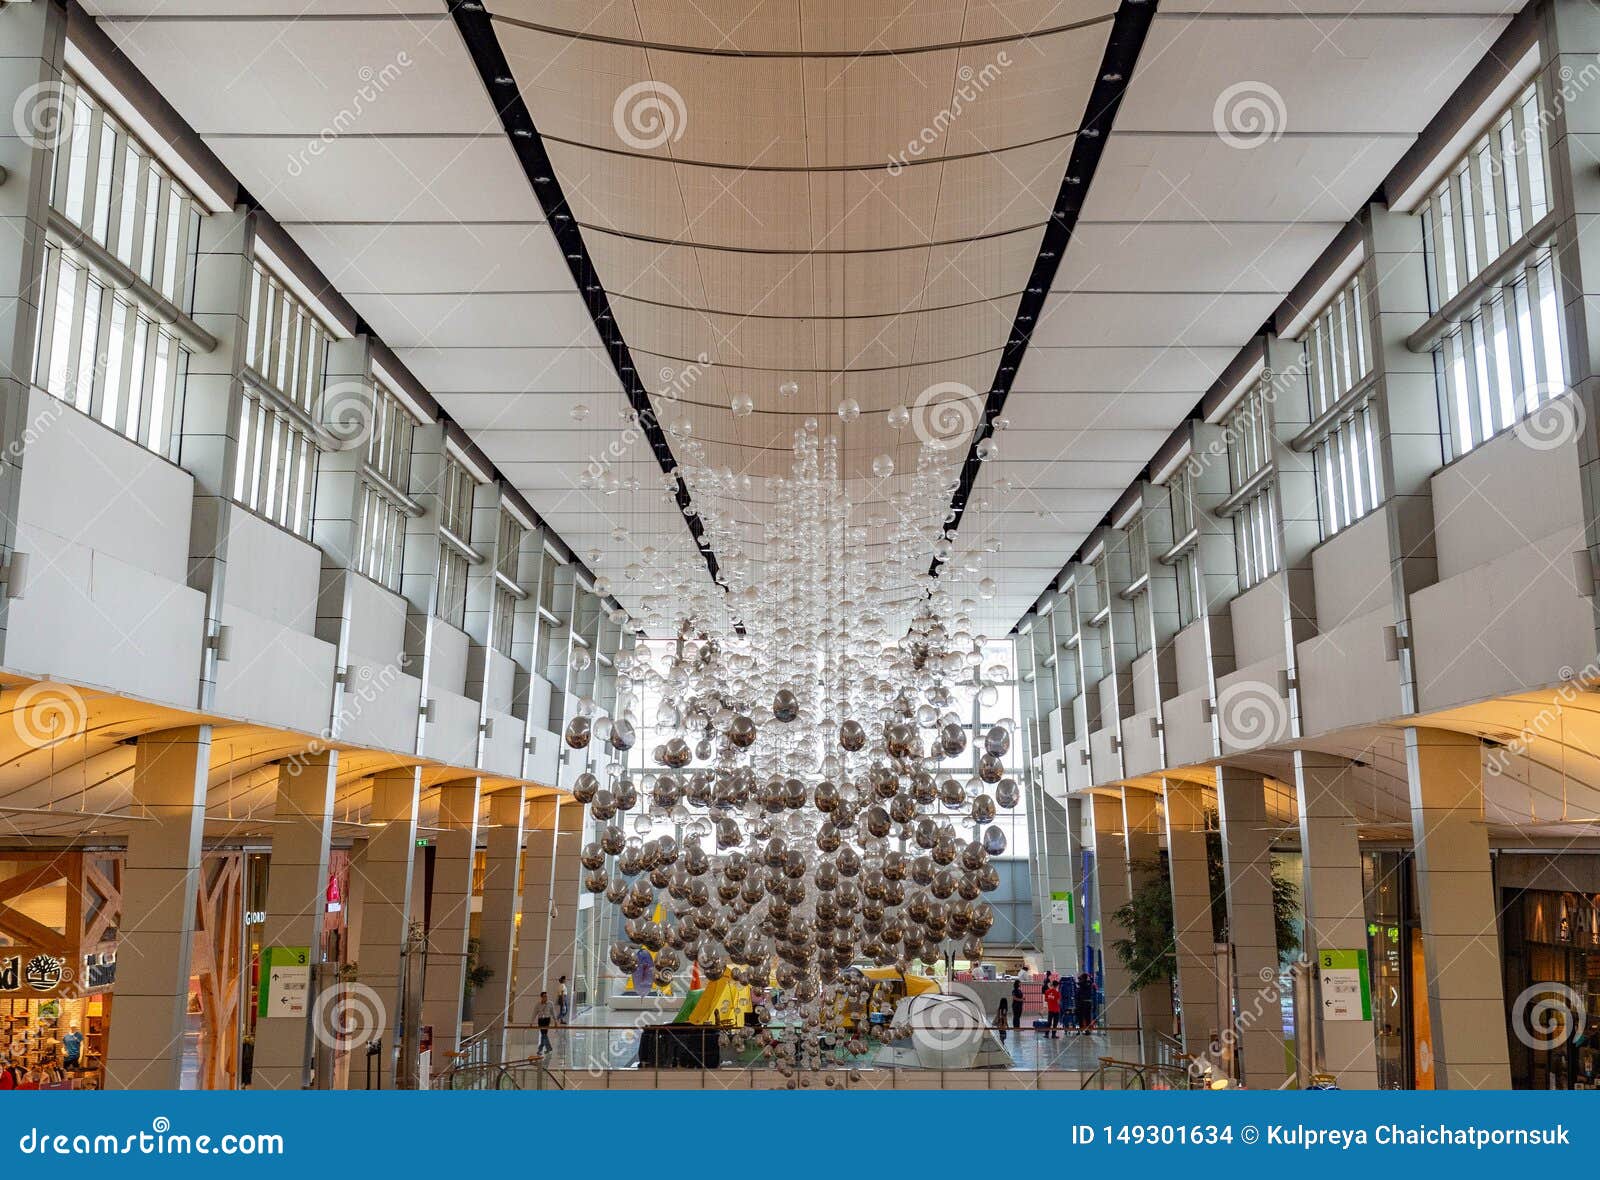 Interior Design Of The Atrium Of The Shopping Center Architecture